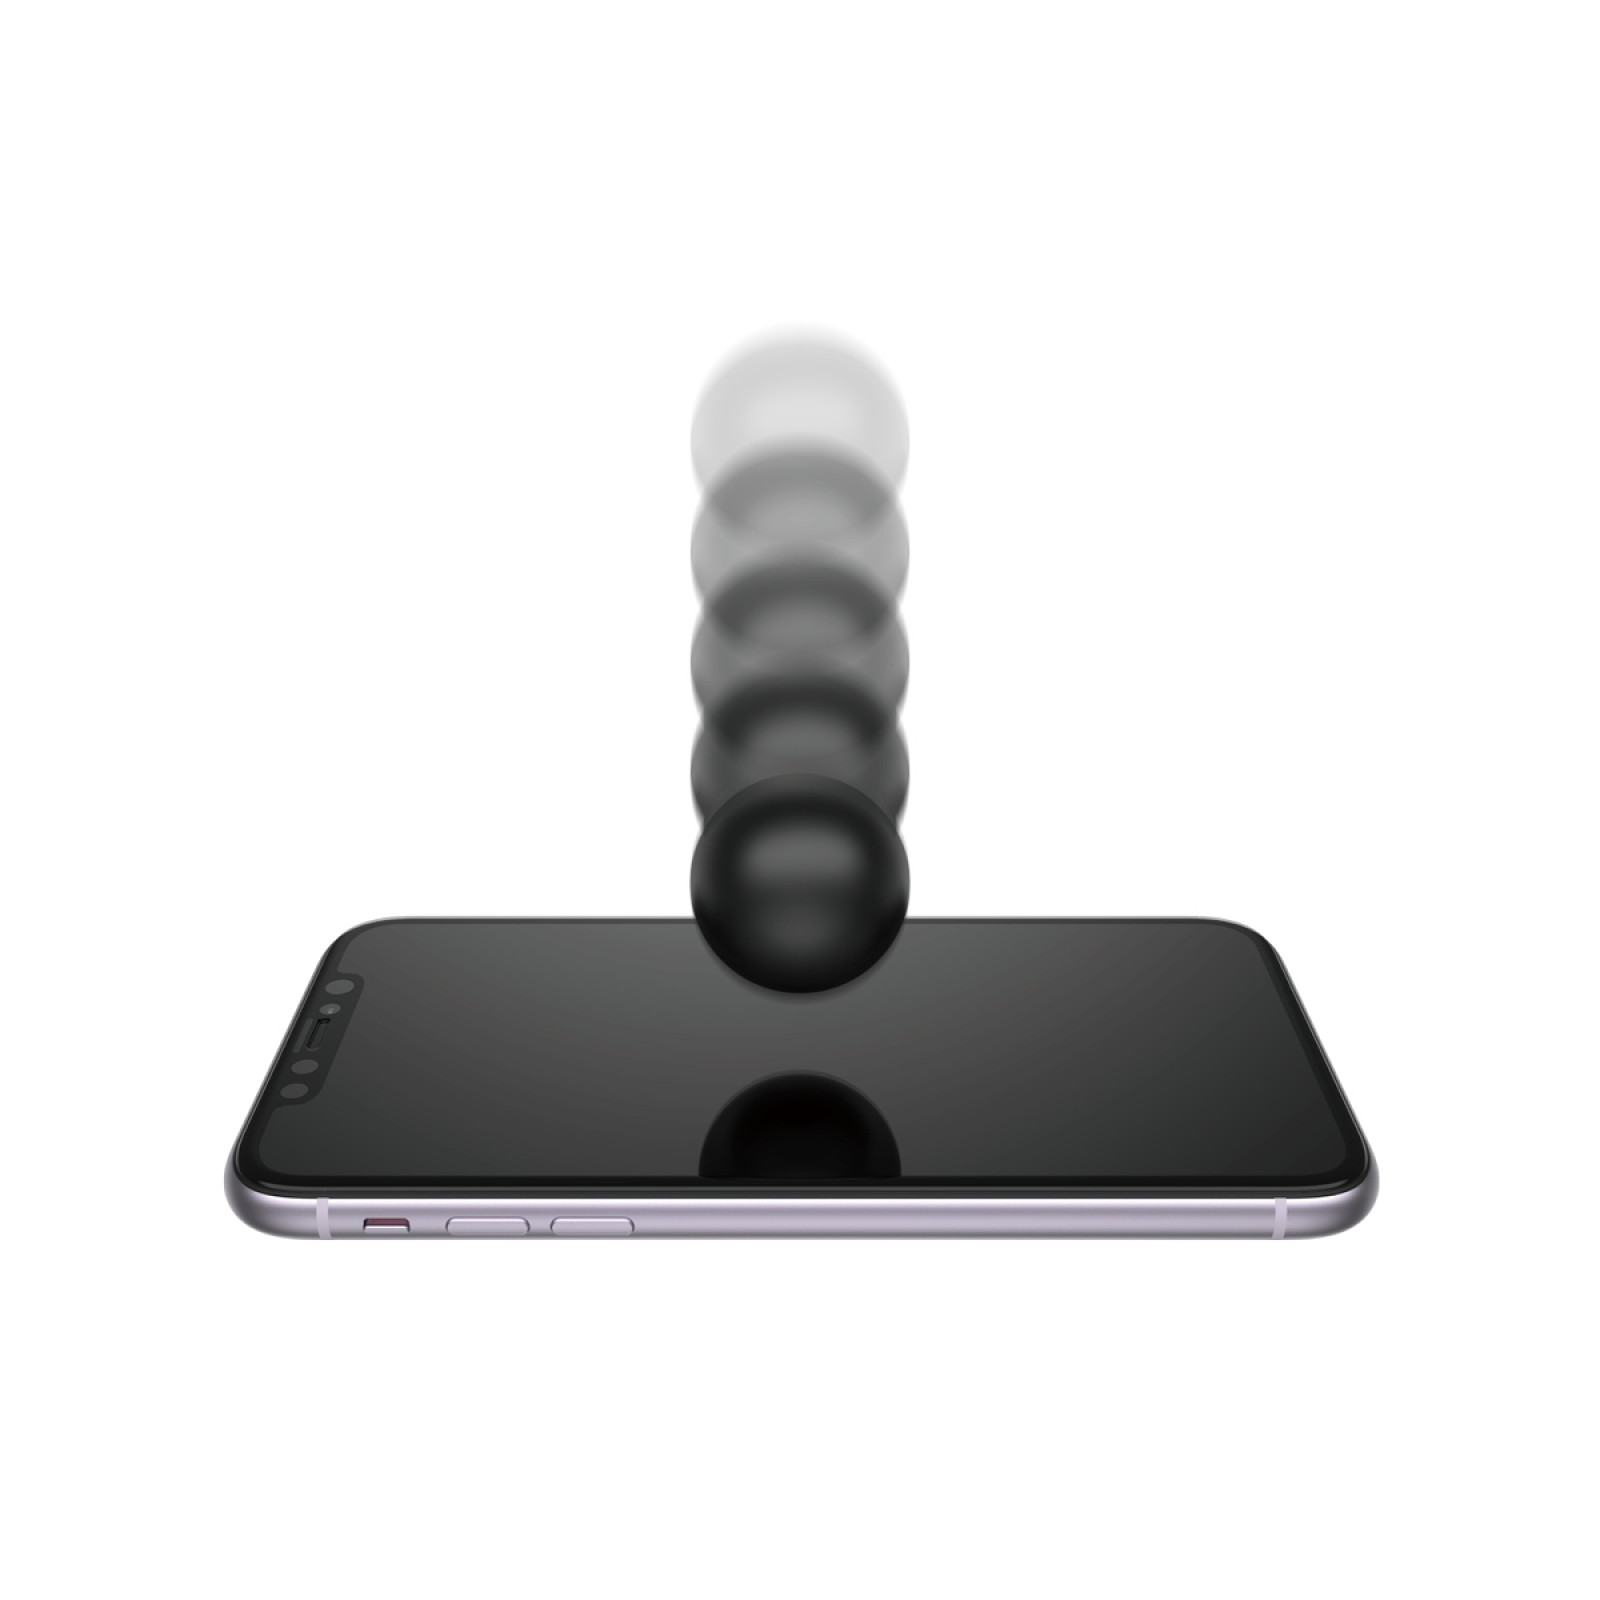 Стъклен протектор Apple iPhone XR/11 PanzerGlass Case Friendly Privacy, Black, 117065